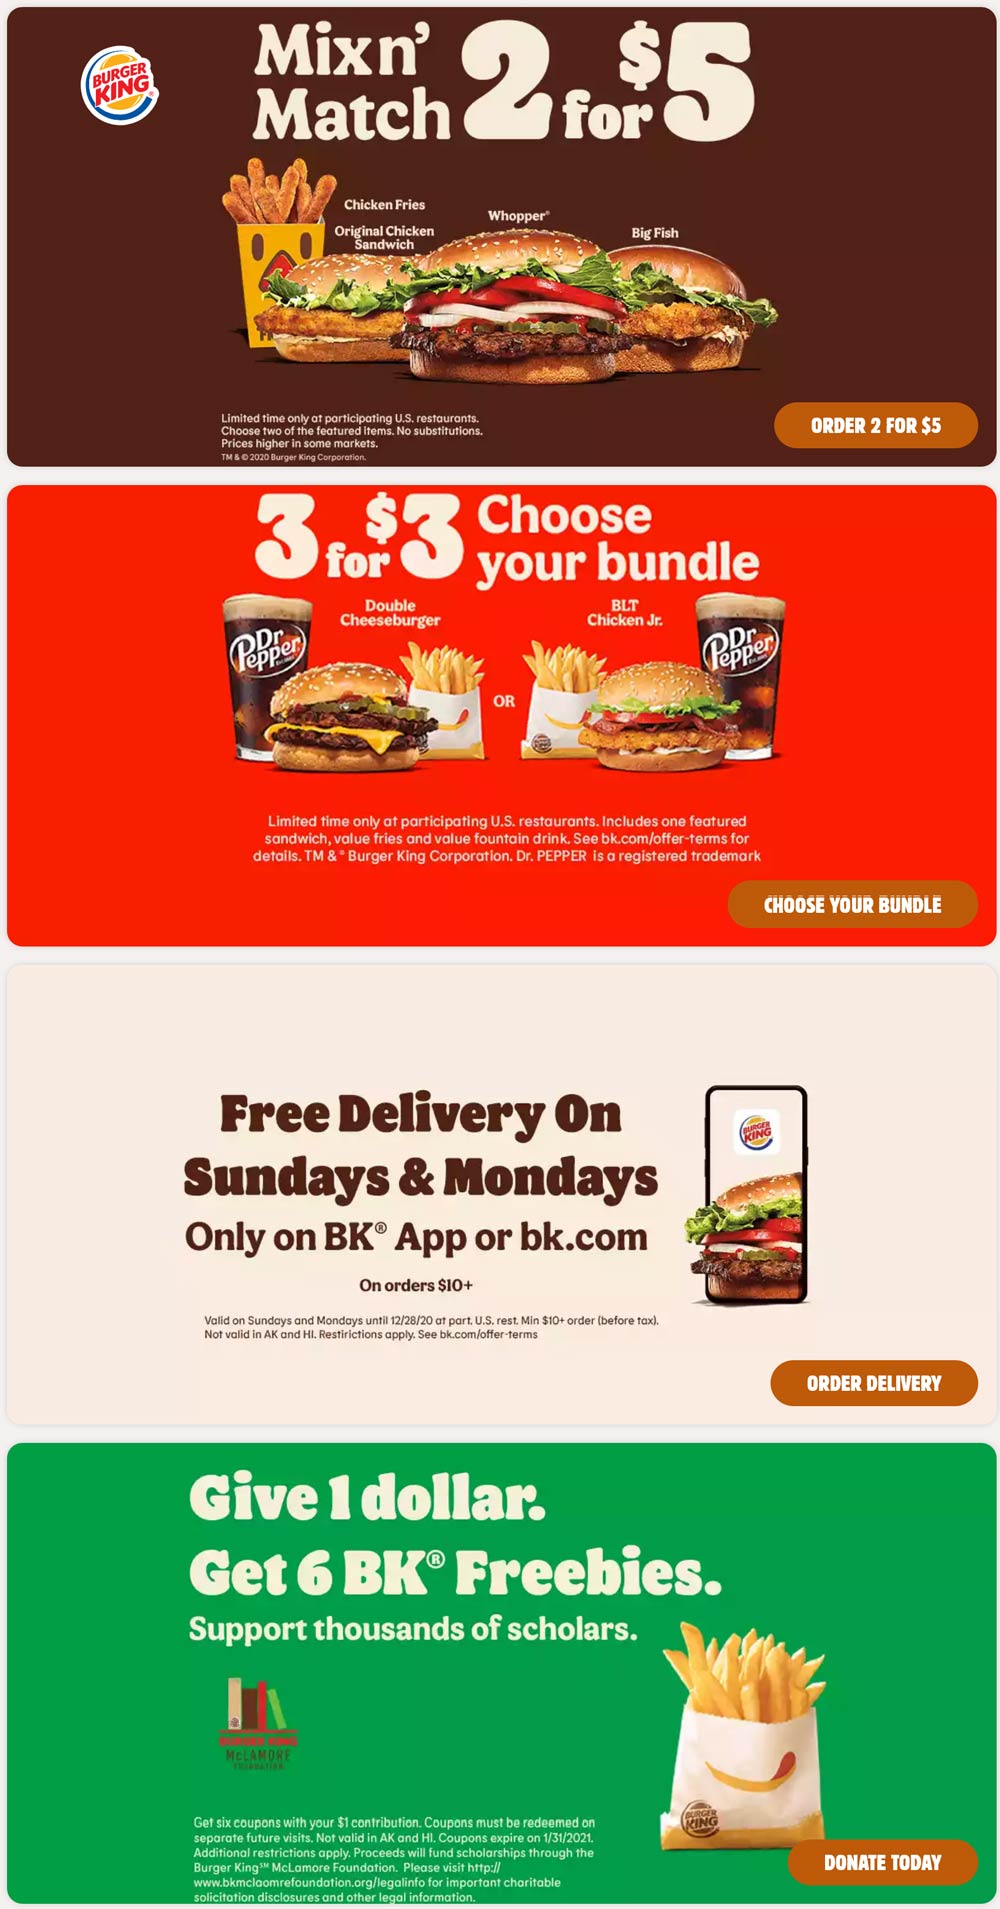 Burger King restaurants Coupon  6 freebies for $1 donation & more at Burger King restaurants #burgerking 